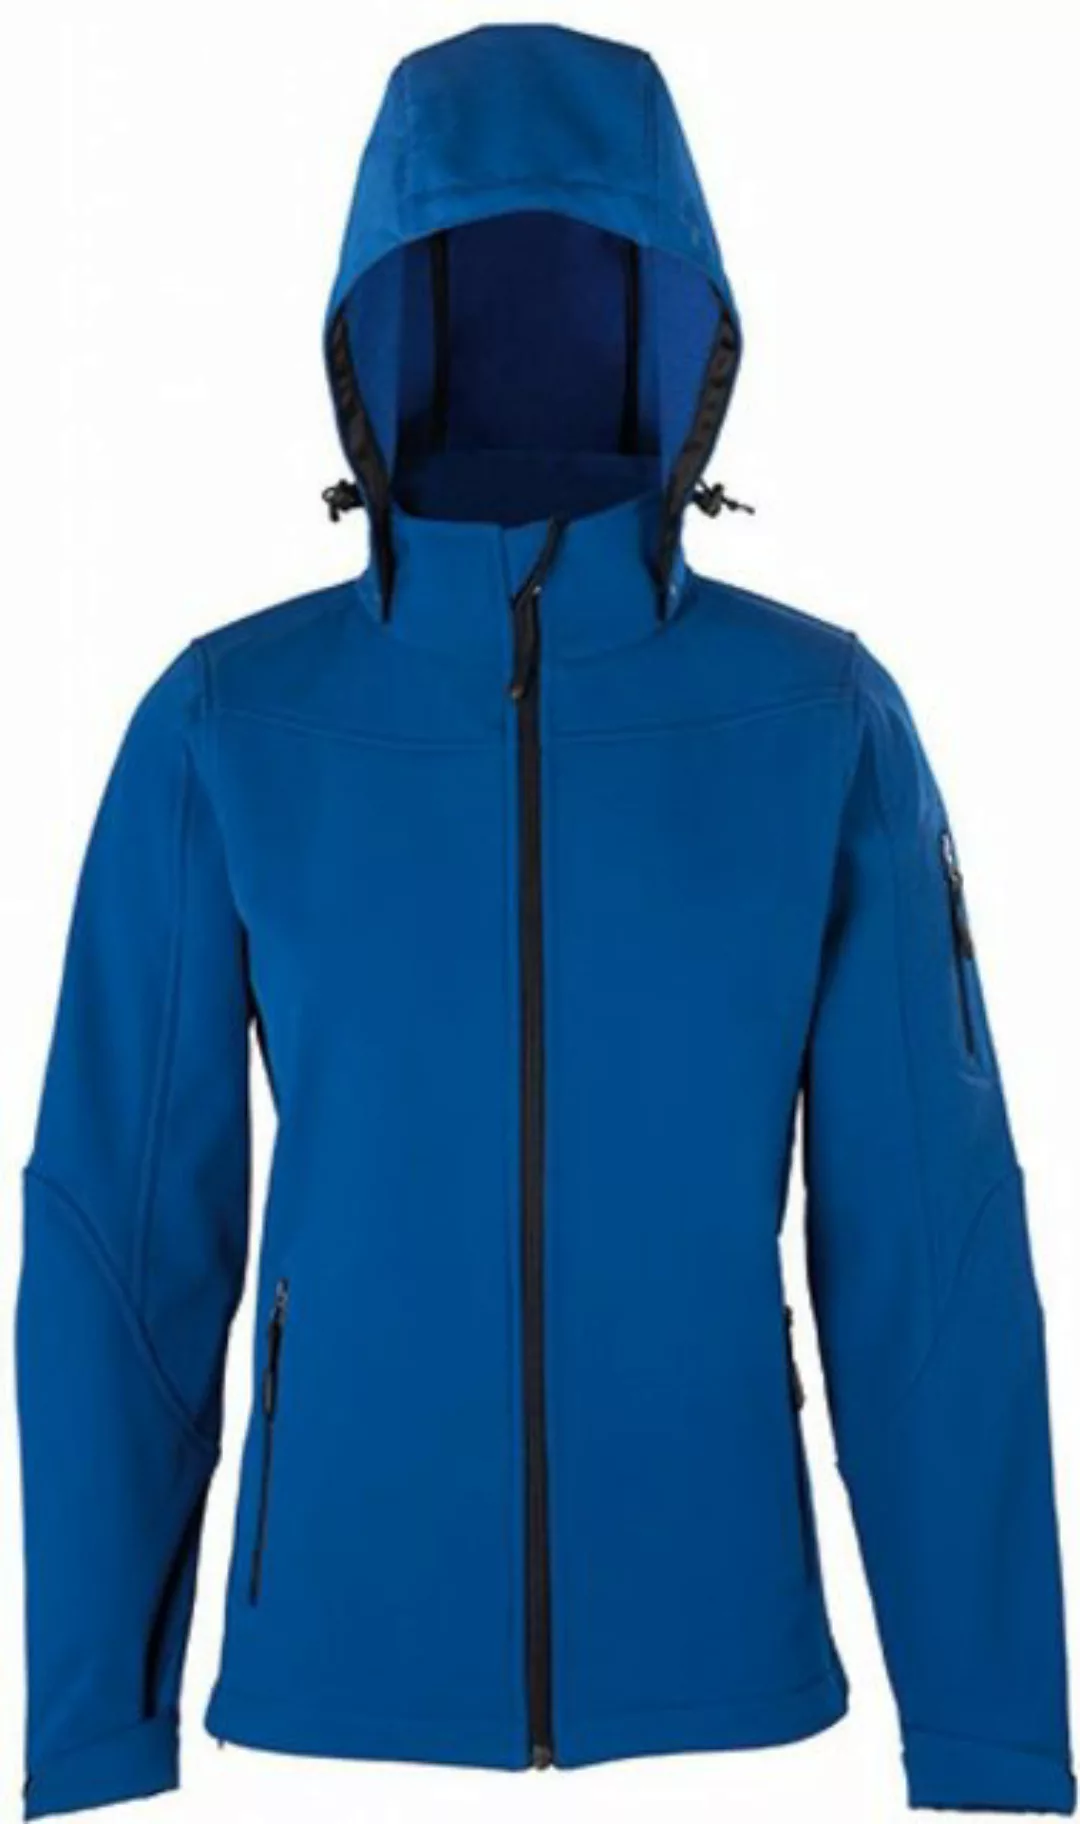 HRM Softshelljacke Damen Jacke Women´s Hooded Soft-Shell Jacket günstig online kaufen